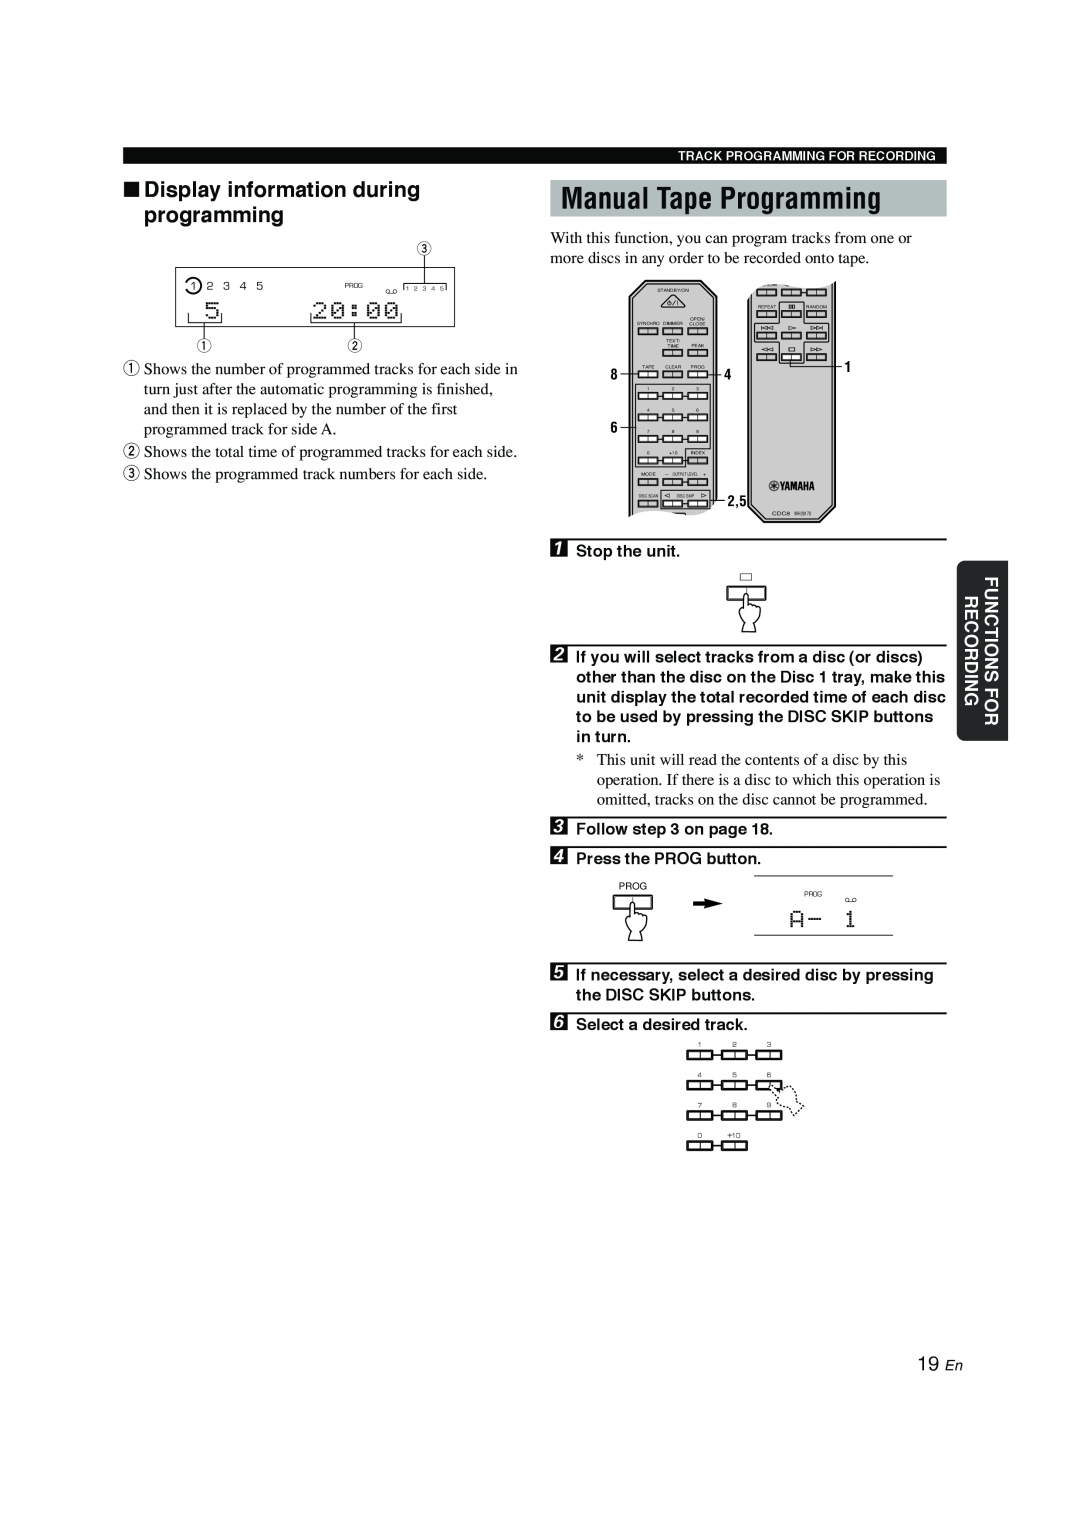 Yamaha CDC-697 Manual Tape Programming, Display information during programming, English, Stop the unit, in turn 